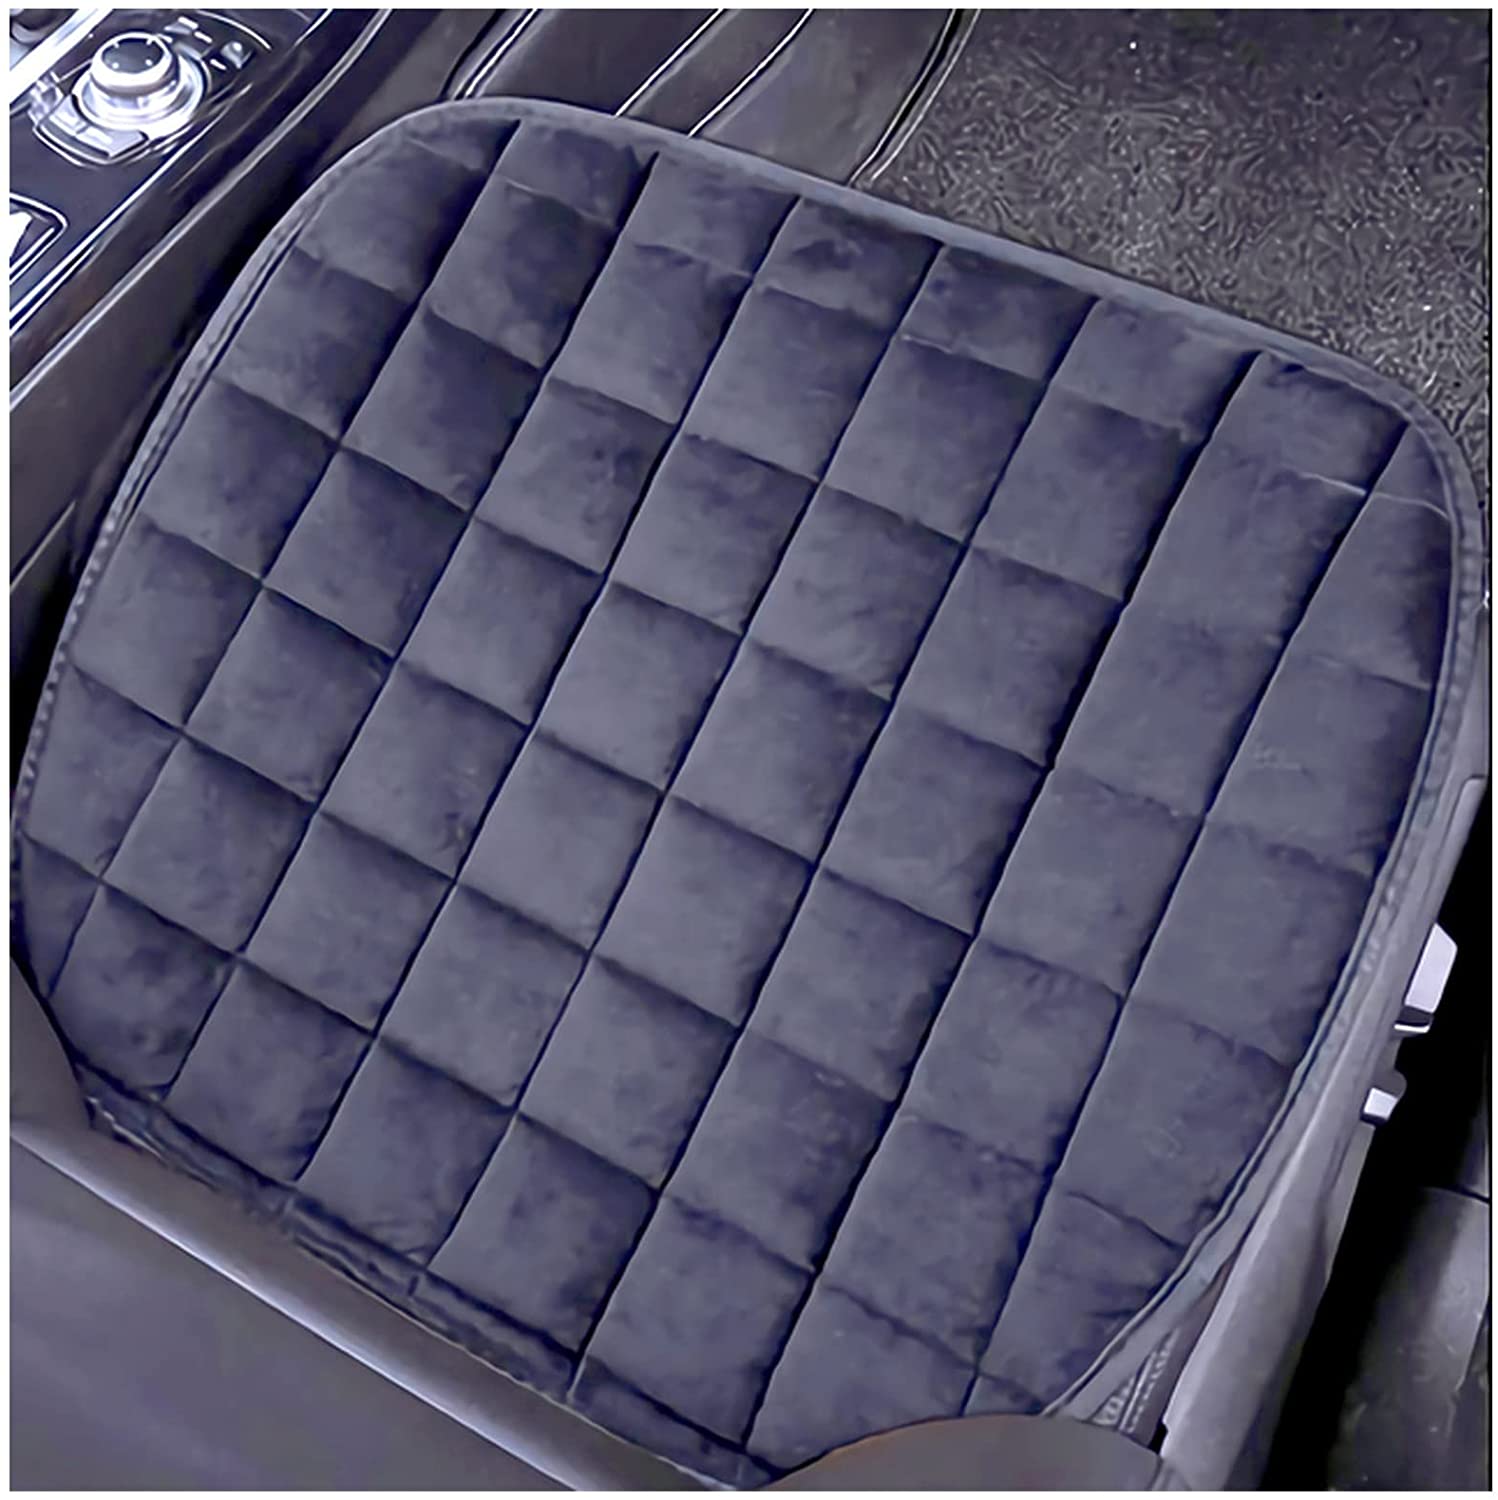 bamutech Seat Cushion Car Seat Cover Fit Truck SUV Van Front Rear Flake Cloth Cushion Non-Slip Winter Car Protector Mat Pad Keep Warm Universal Seat Cushion Chair (Size : Black Front 1)